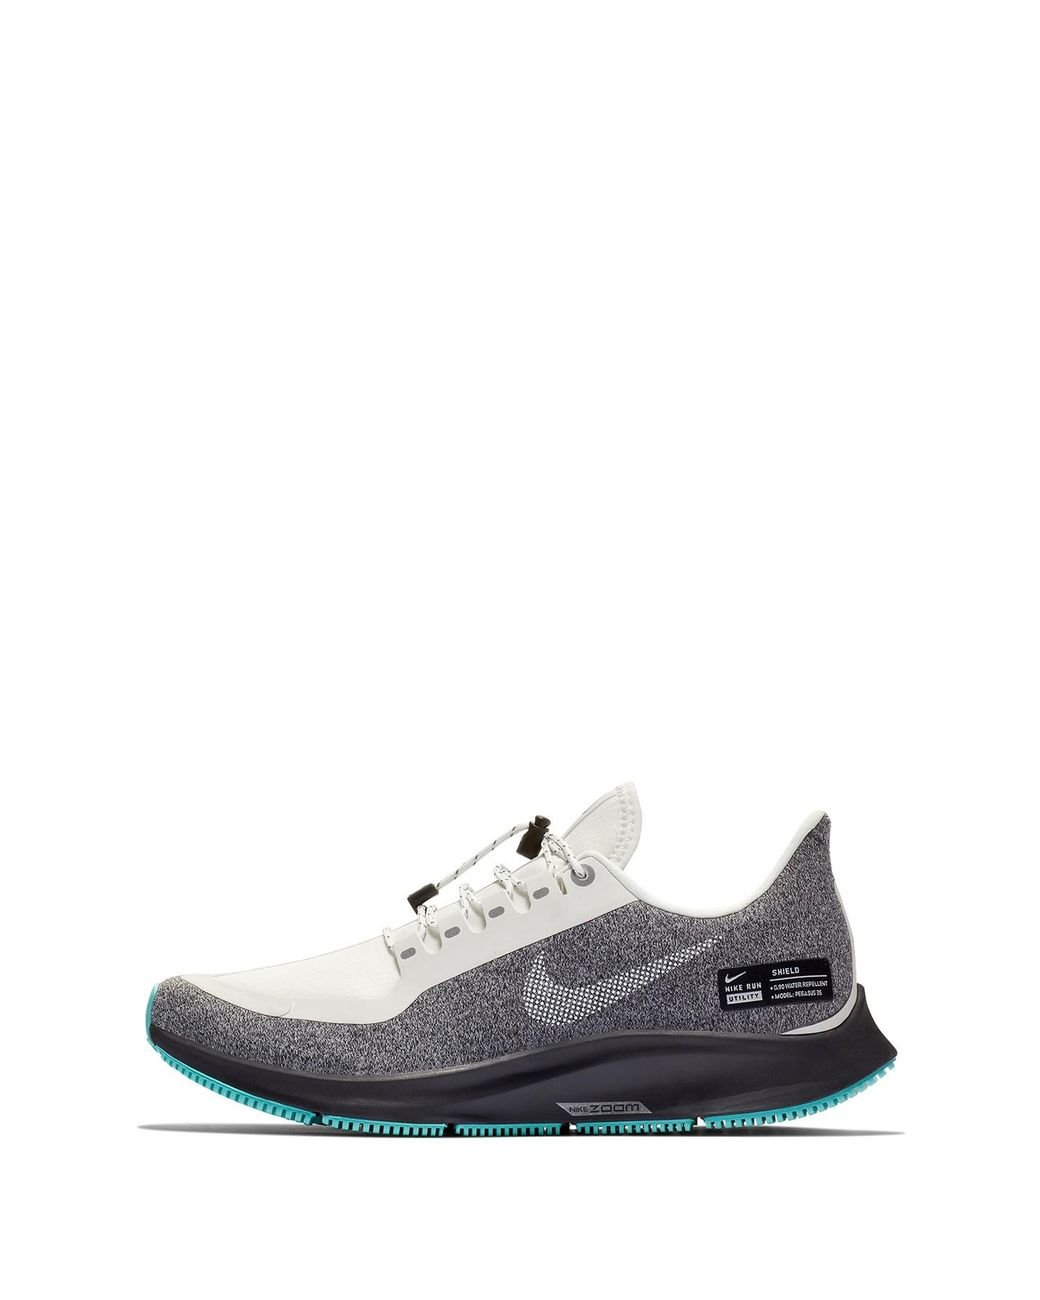 Nike Air Zoom Pegasus 35 Shield Gs Water Repellent Running Shoe in